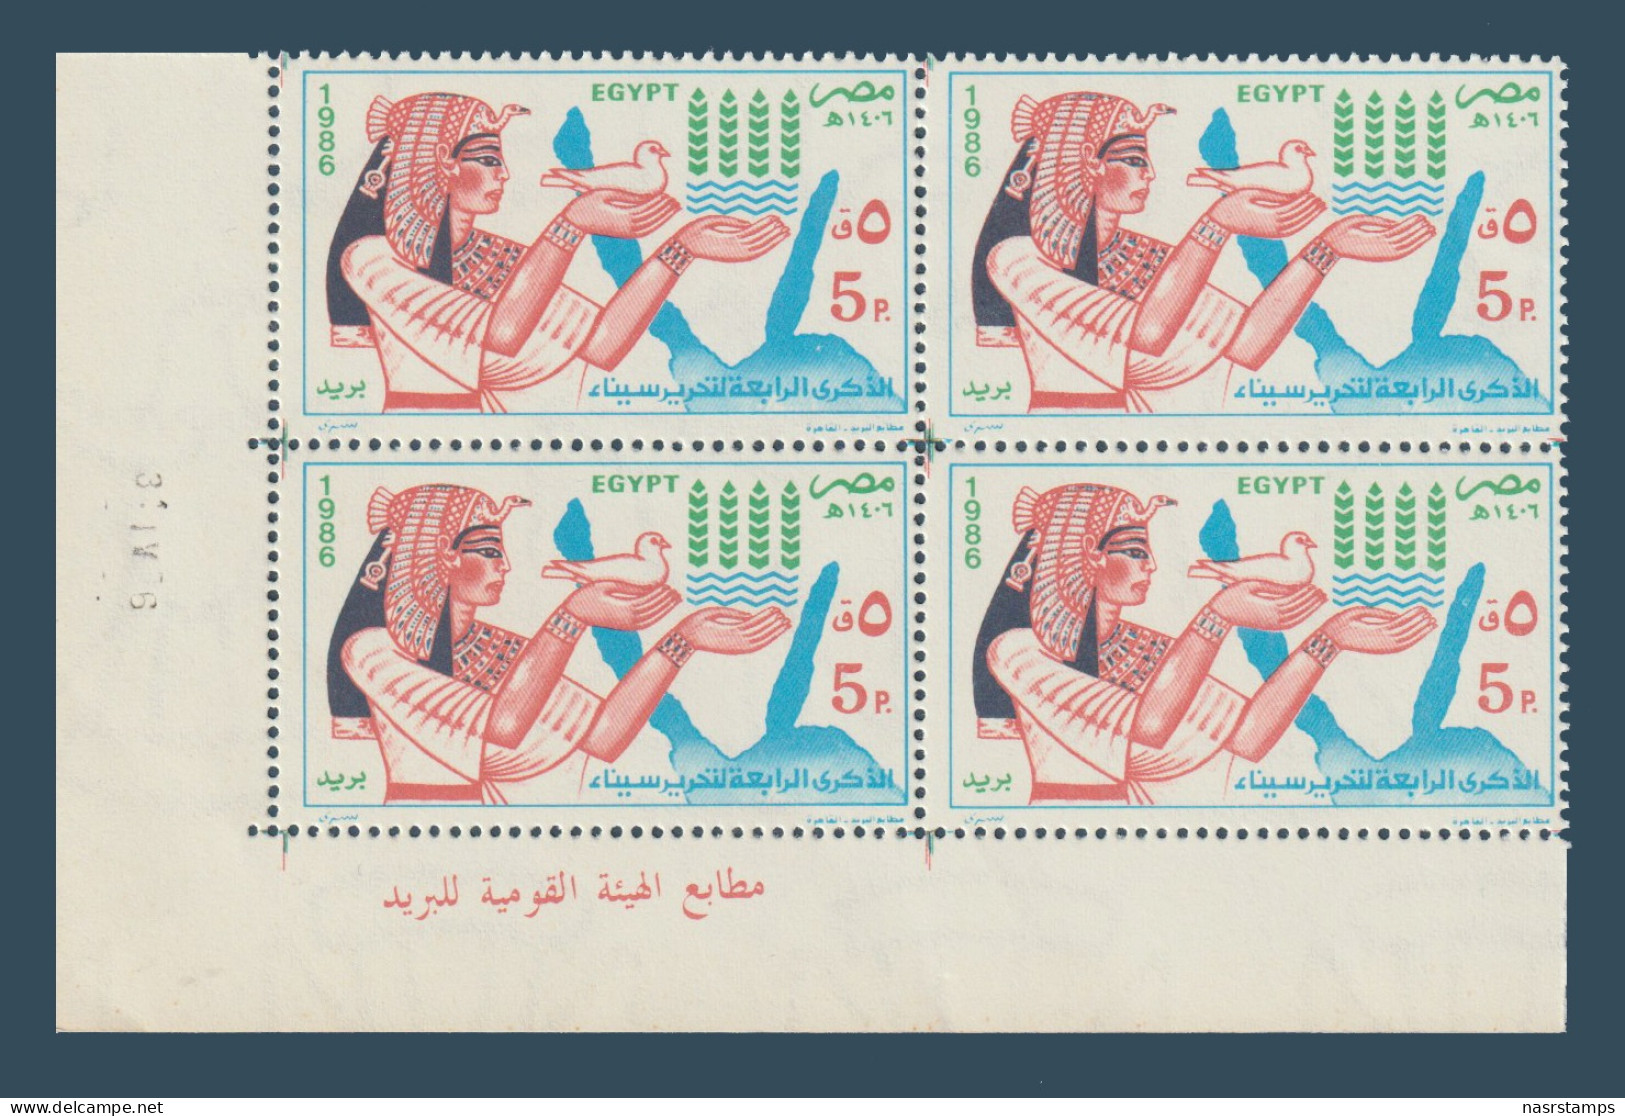 Egypt - 1986 - Return Of The Sinai To Egypt, 4th Anniv. - Queen Nefertiti - MNH - Neufs